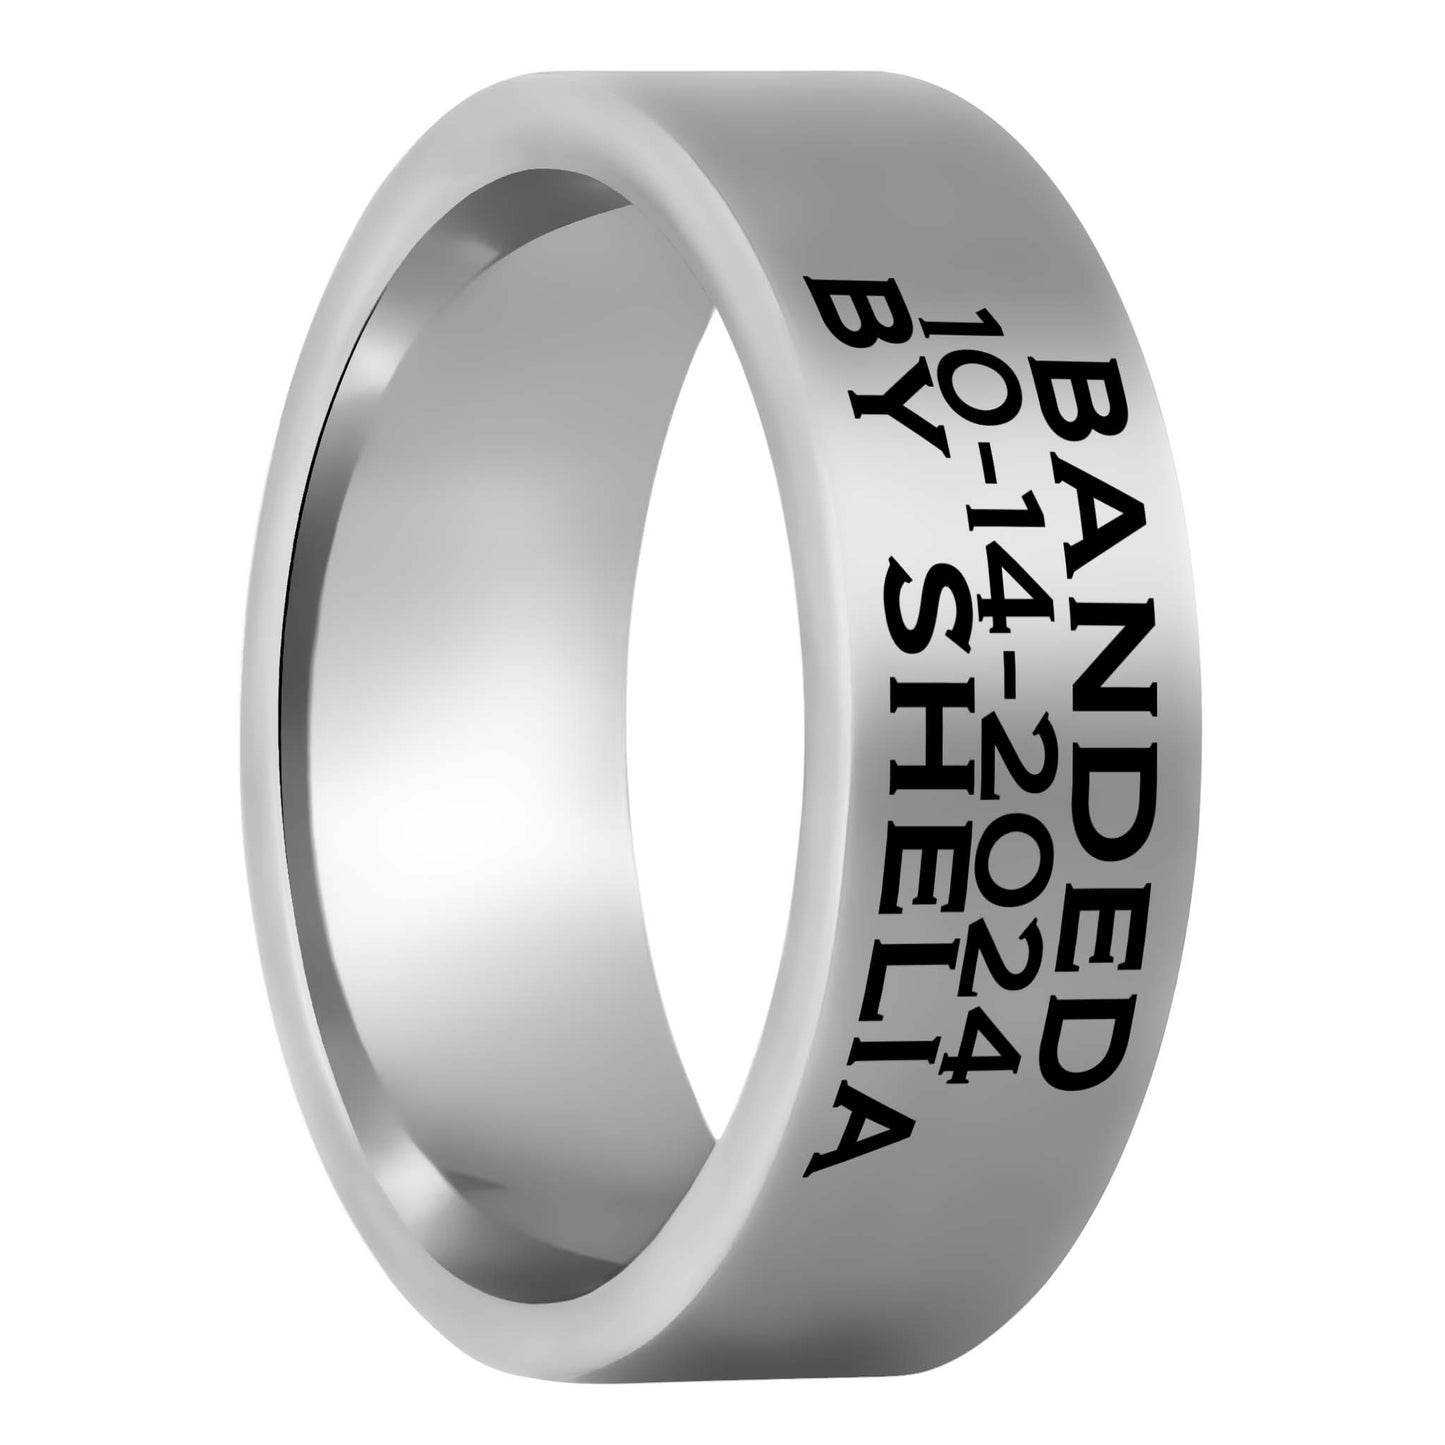 Duck Band Custom Engraved Tungsten Men's Ring